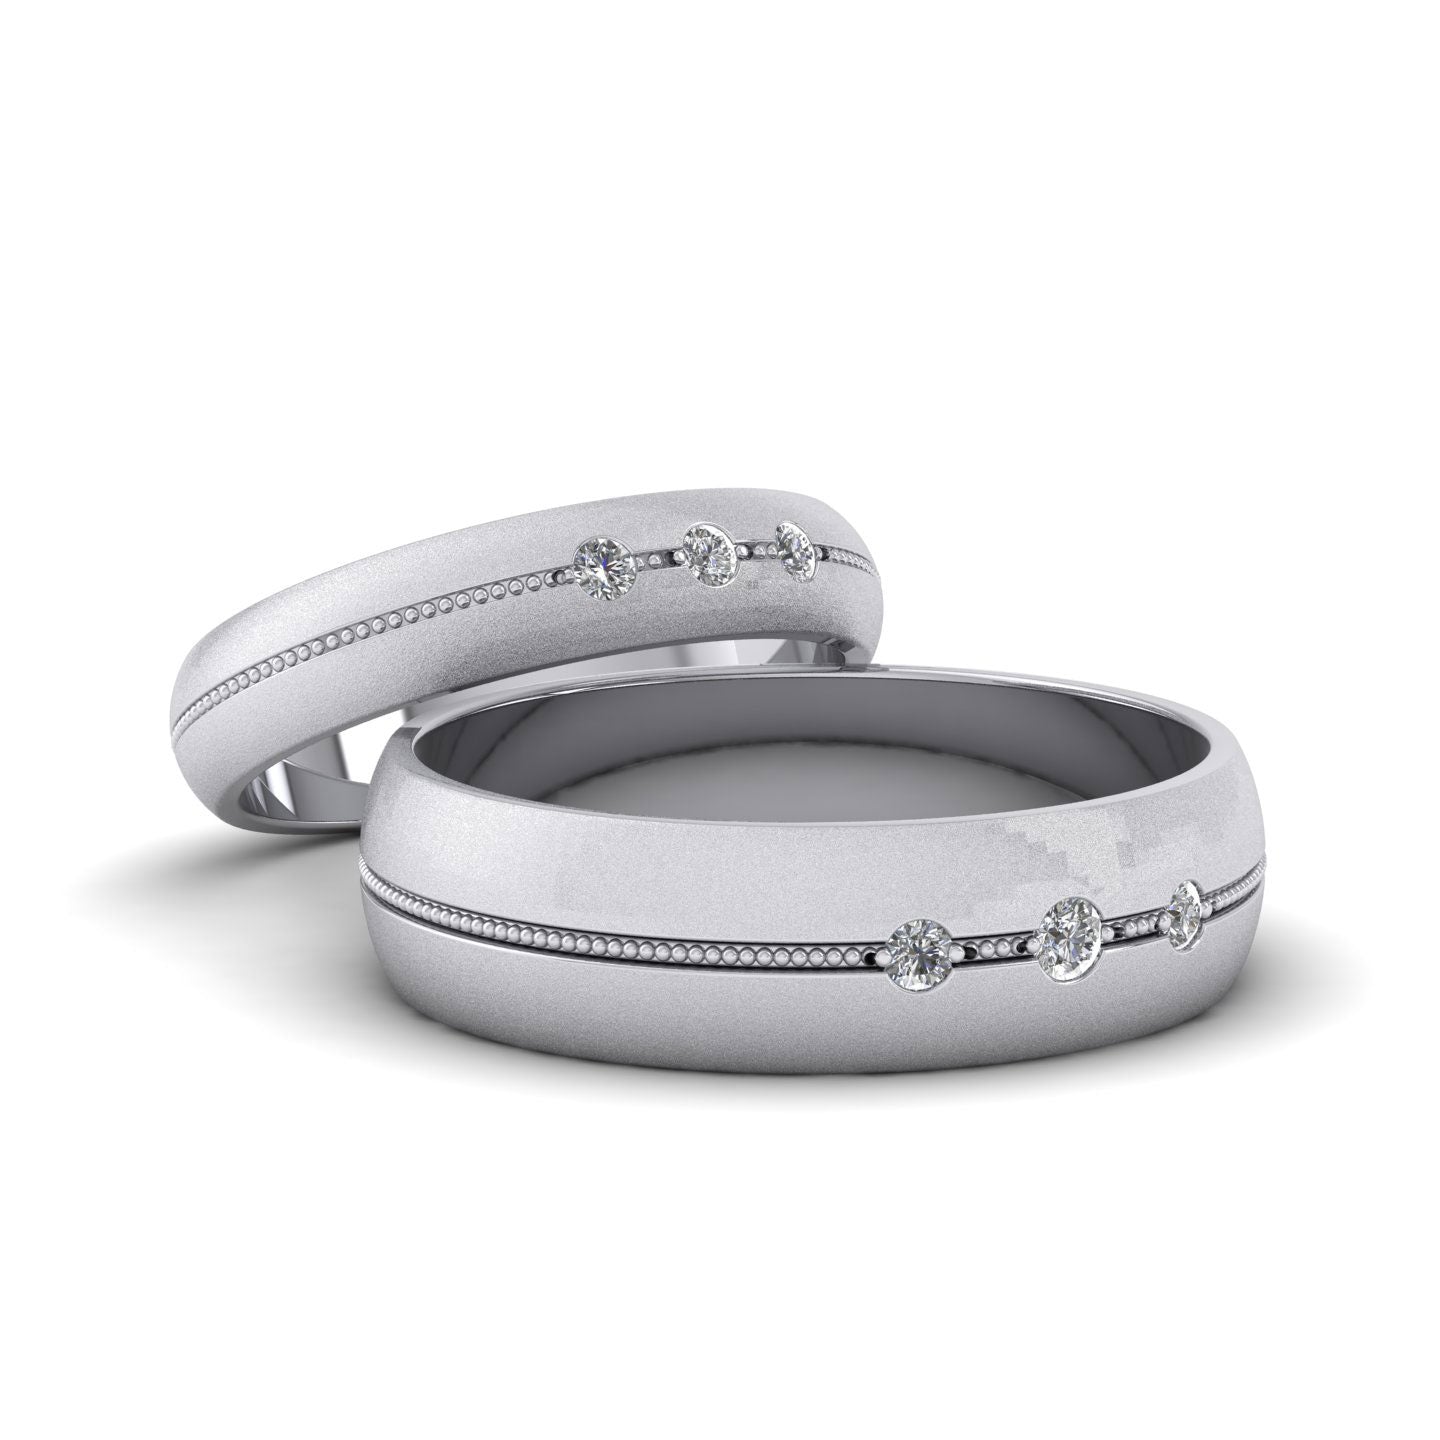 Three Diamond And Centre Millgrain Pattern 9ct White Gold 4mm Wedding Ring